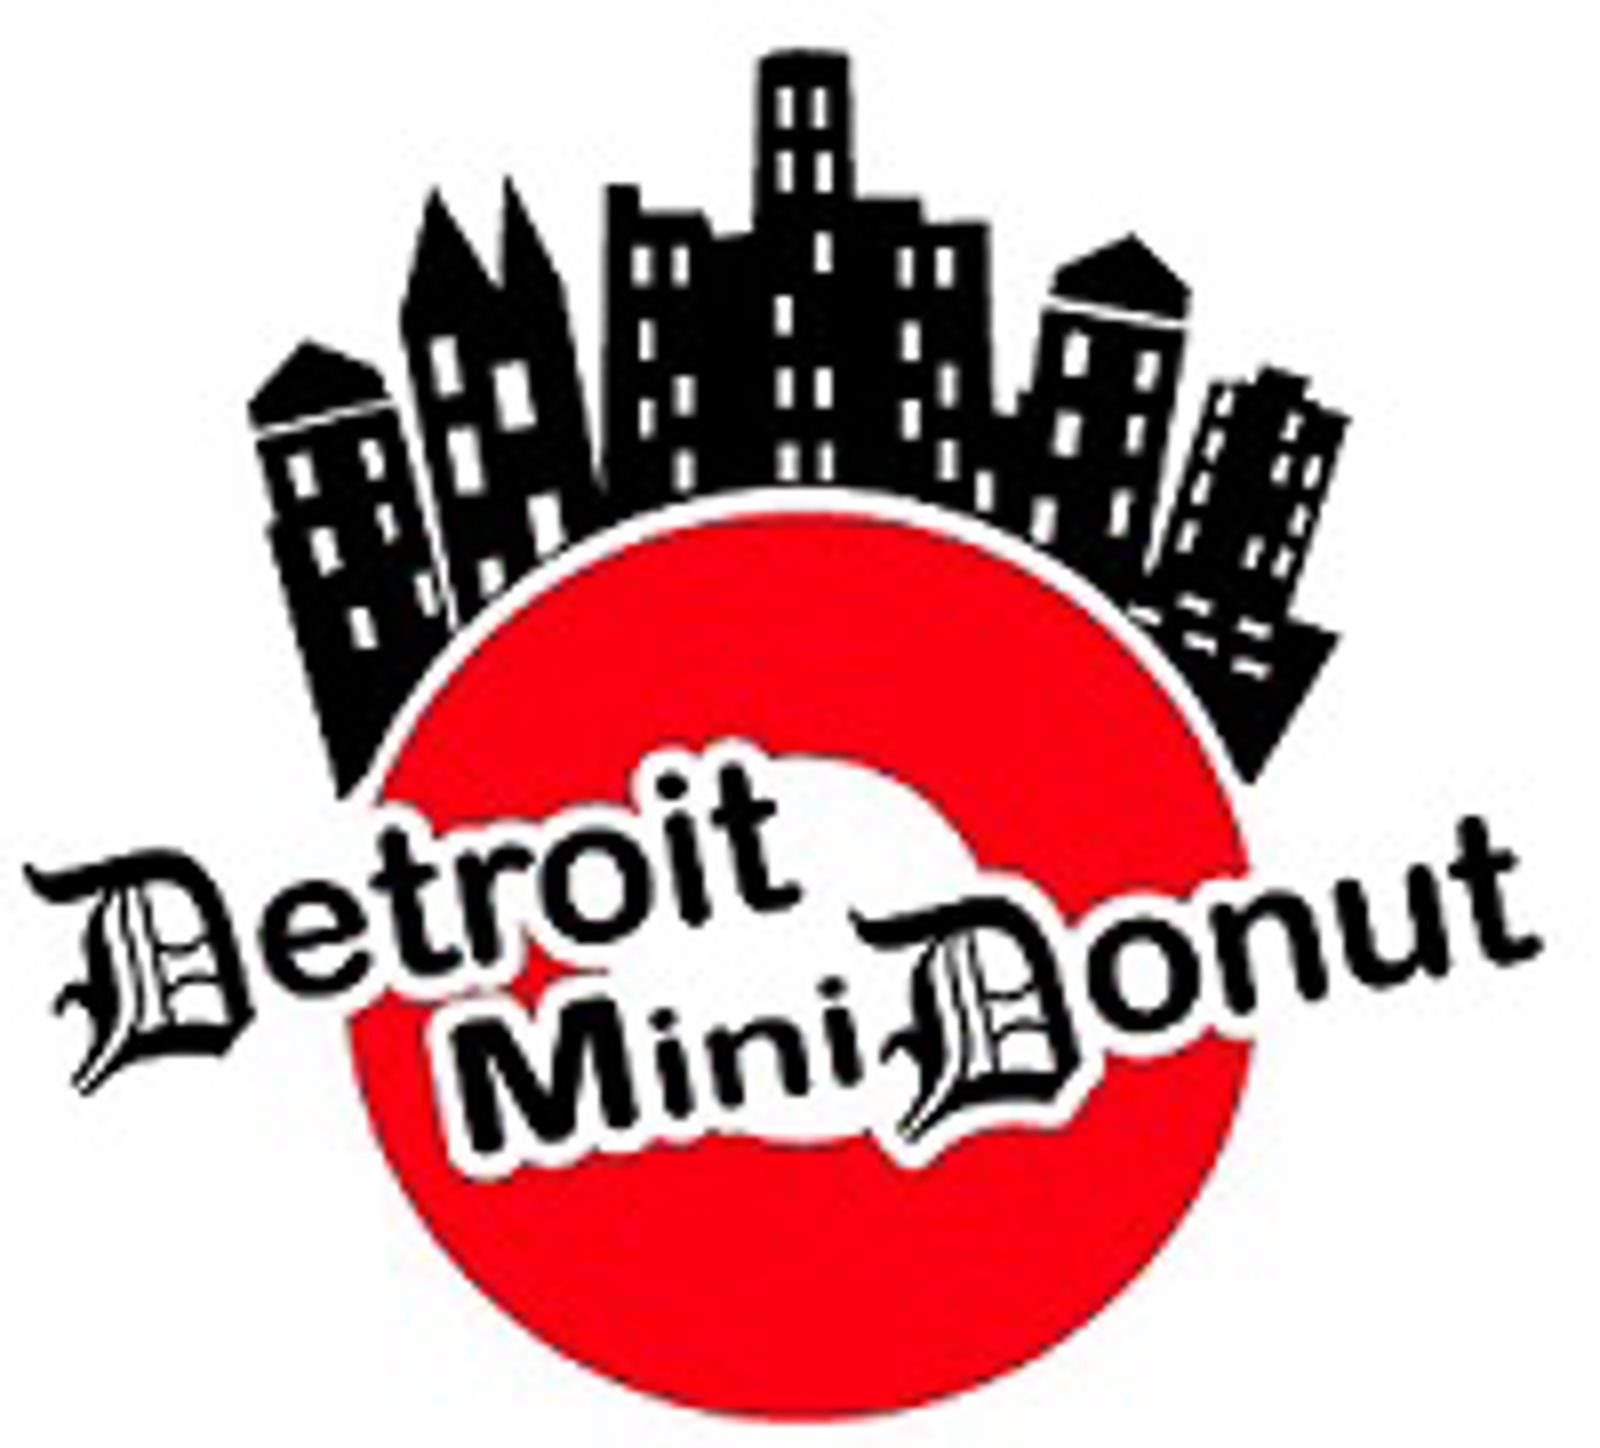 Detroit Mini Donut